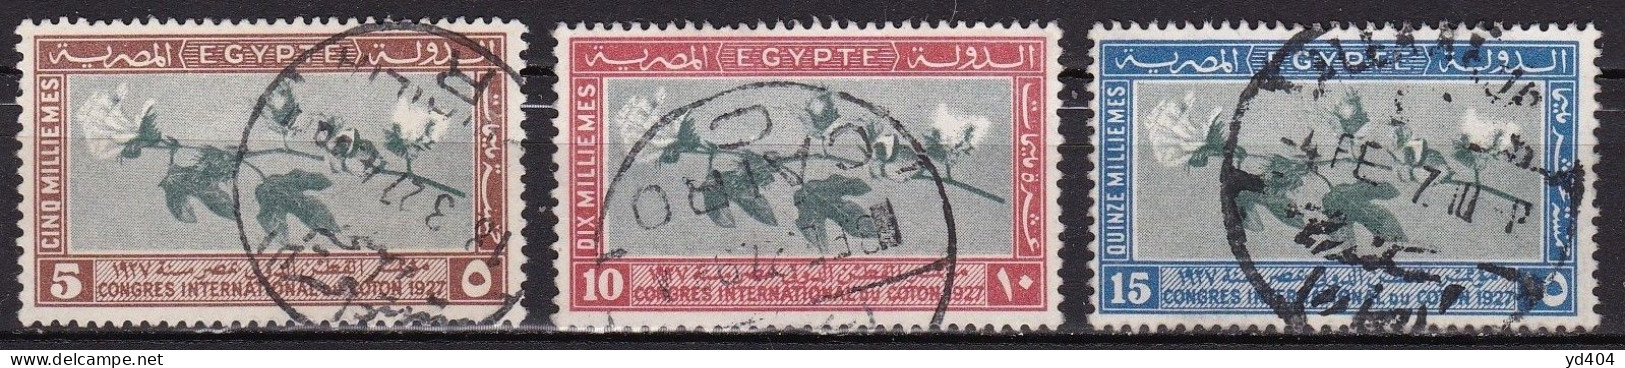 EG061 – EGYPTE – EGYPT – 1927 – INTERNATIONAL COTTON CONGRESS - Y&T # 115/117 USED - Gebruikt